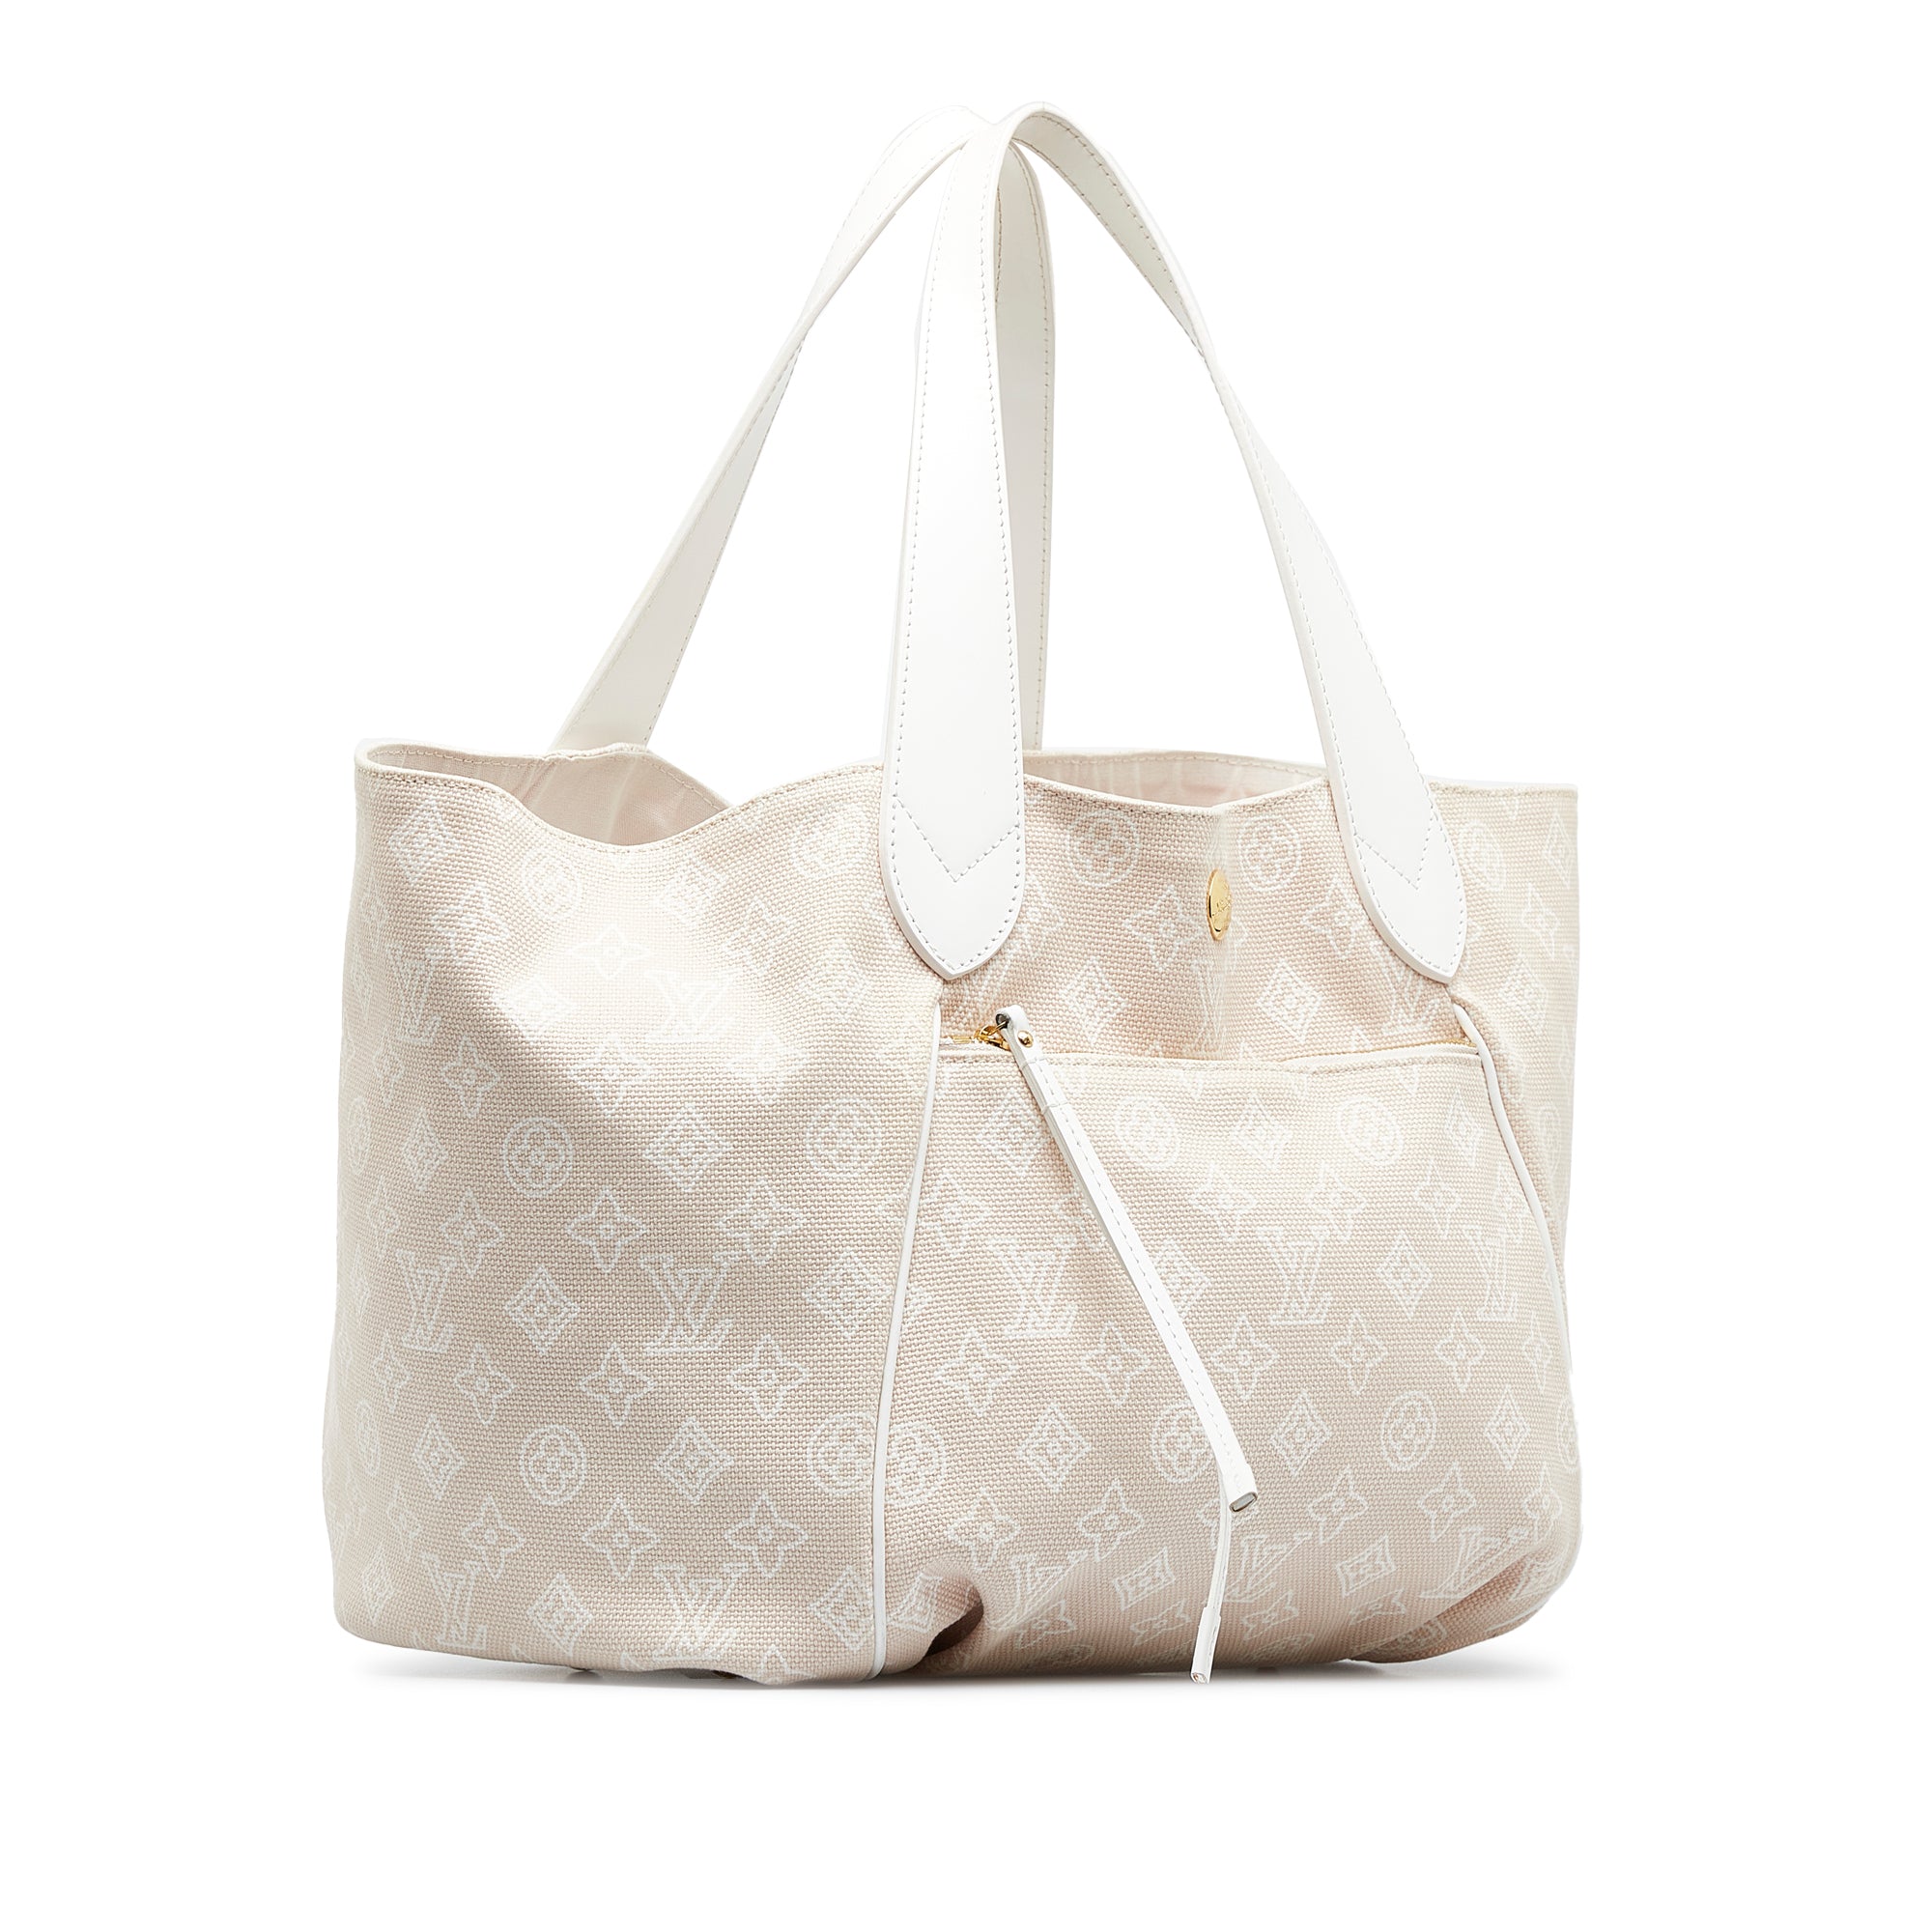 Louis Vuitton - Authenticated Handbag - Cloth Beige for Women, Very Good Condition